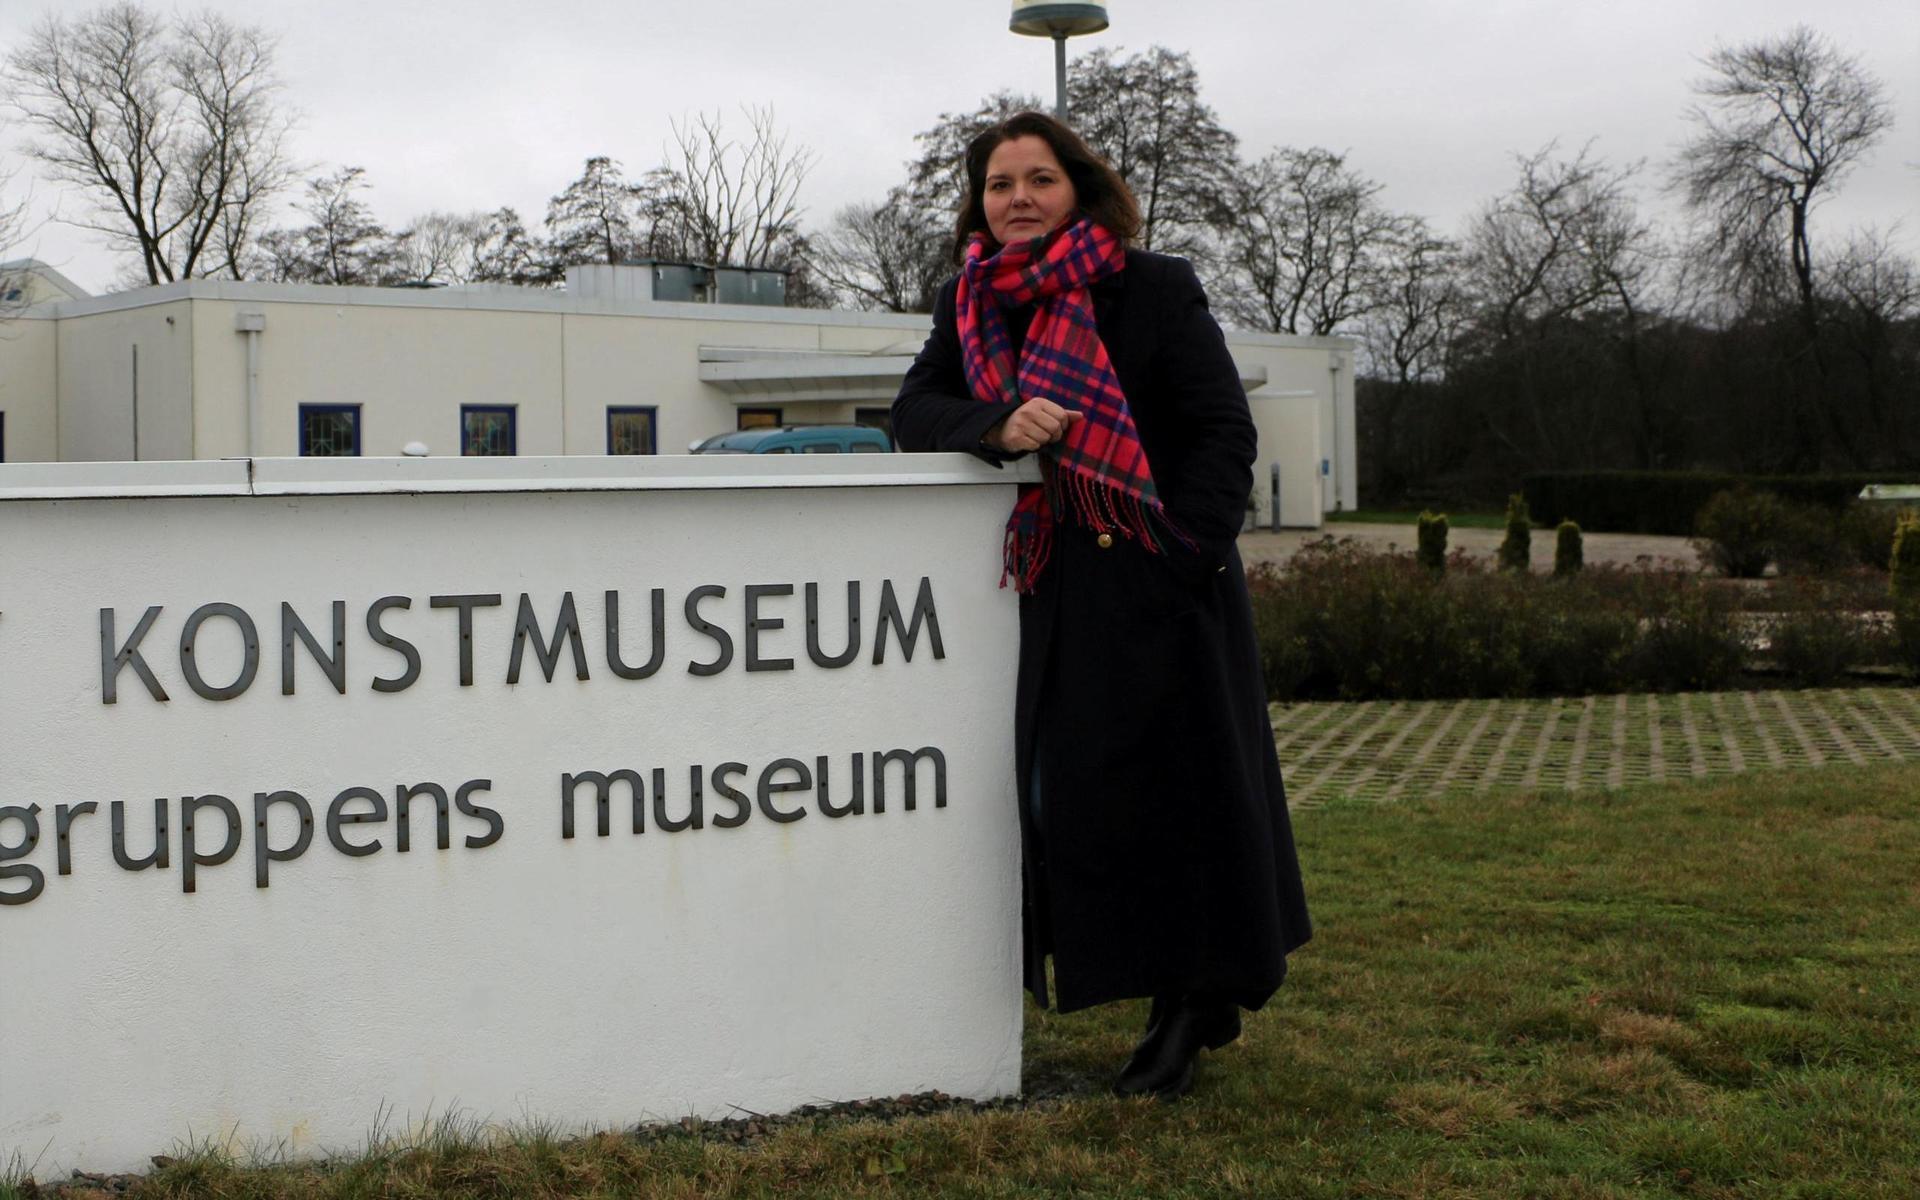 Mjellby konstmuseums musei- och enhetschefen Karolina Peterson.